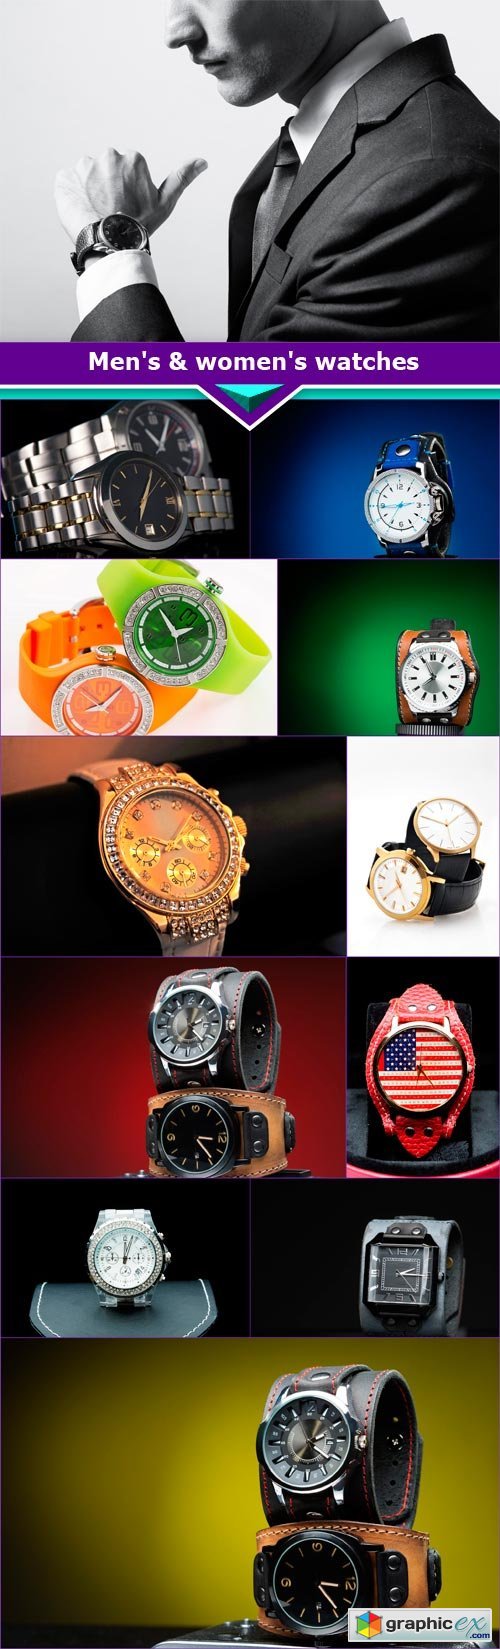 Men's & women's watches 12x JPEG